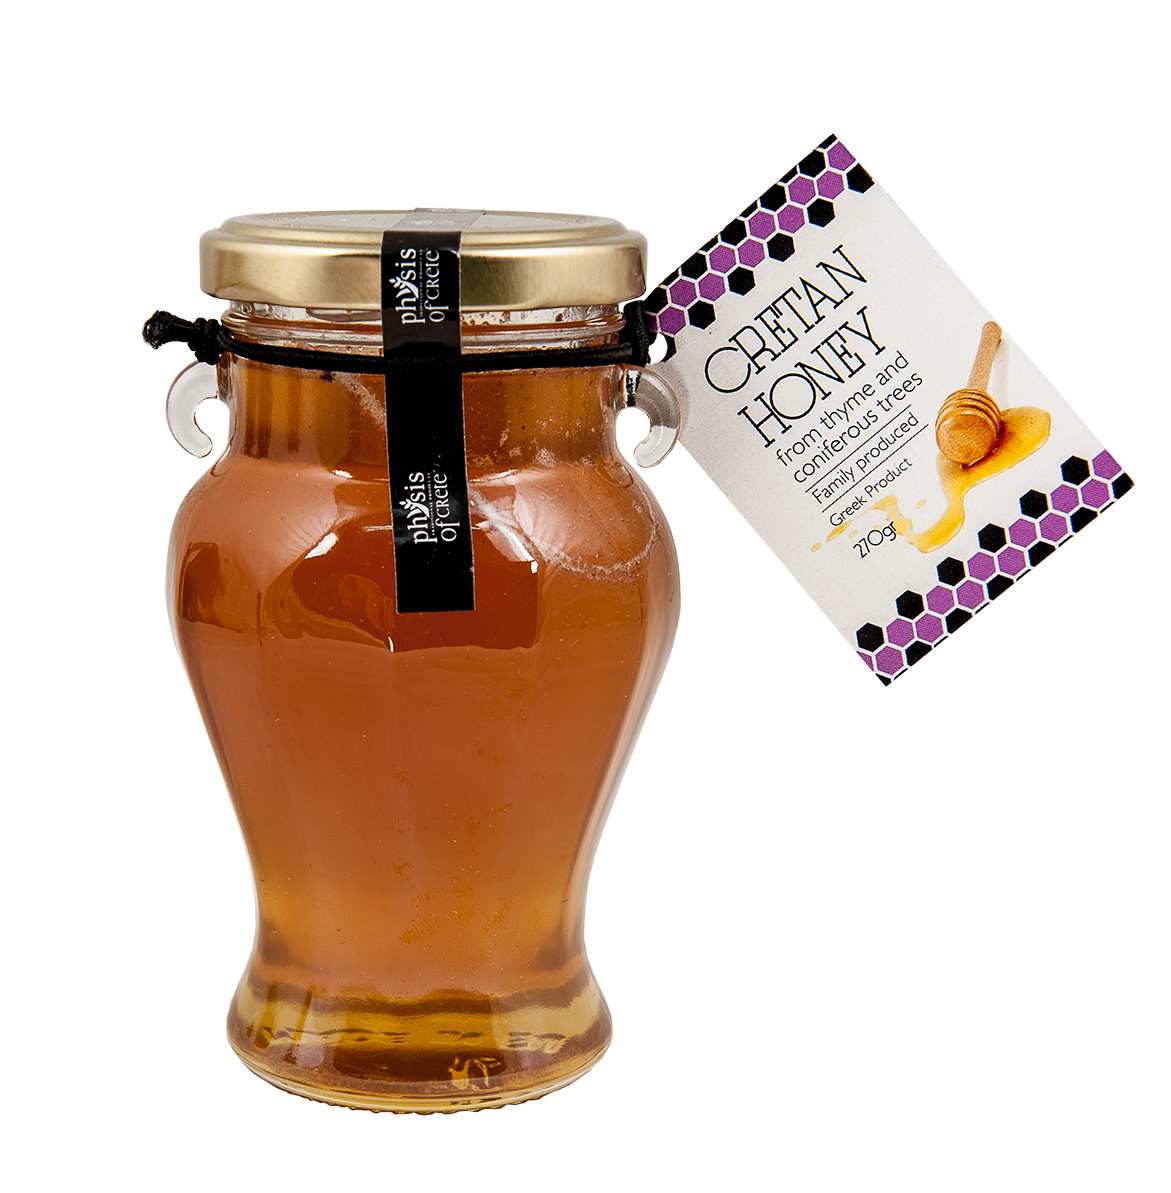 Cretan Thyme honey